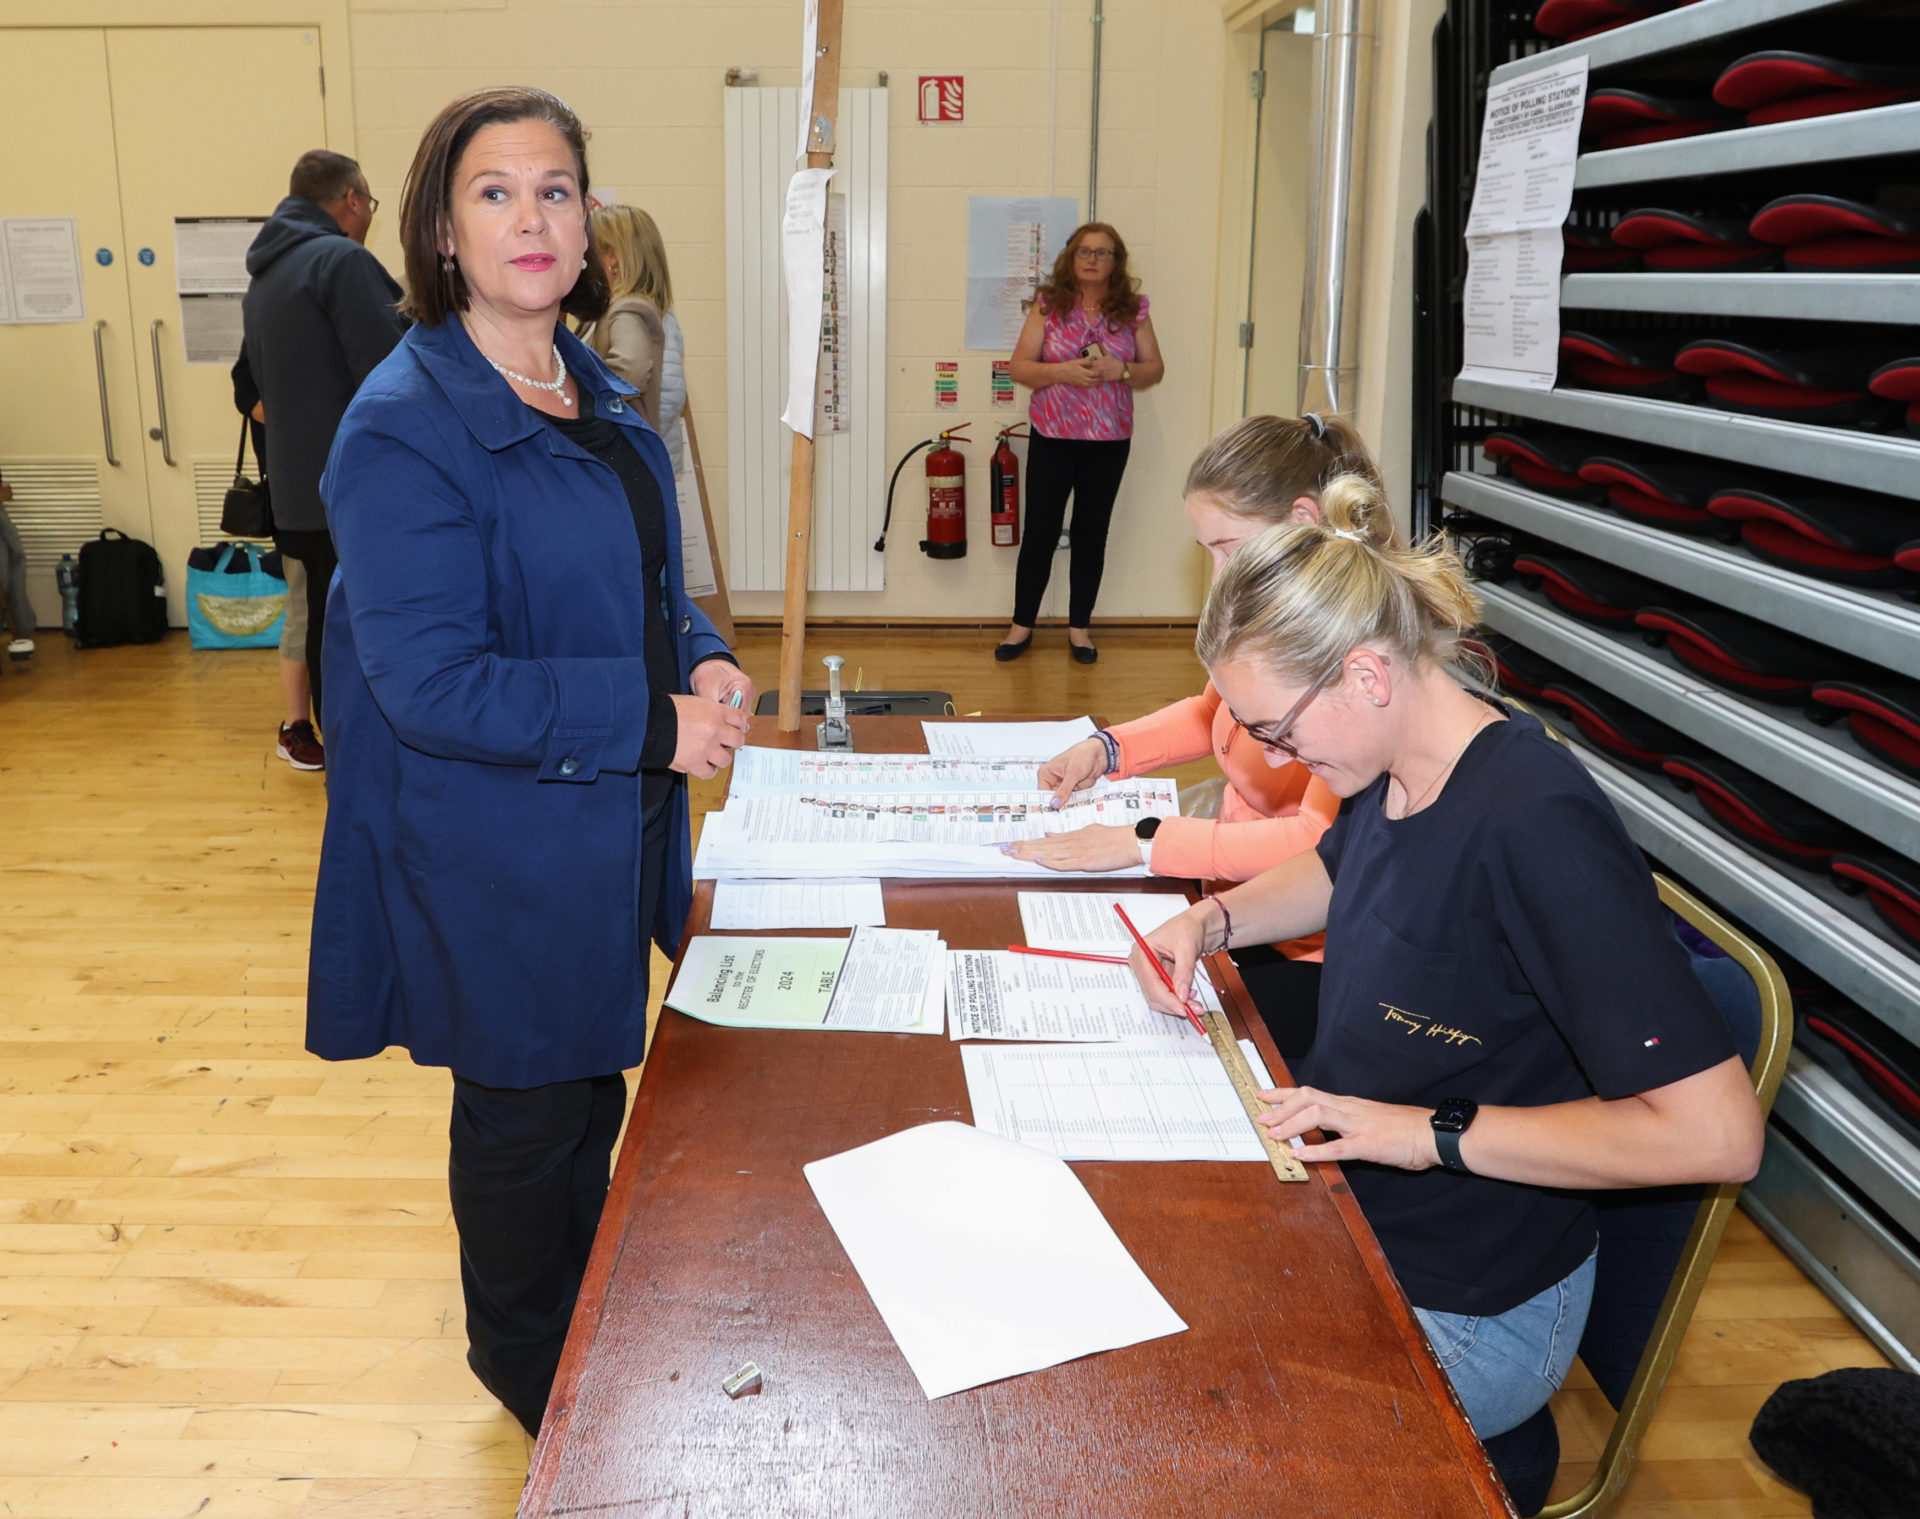 Sinn Féin leader Mary Lou McDonald casts her vote at the polling station in the Deaf Village, Dublin. Photograph: Sasko Lazarov / © RollingNews.ie